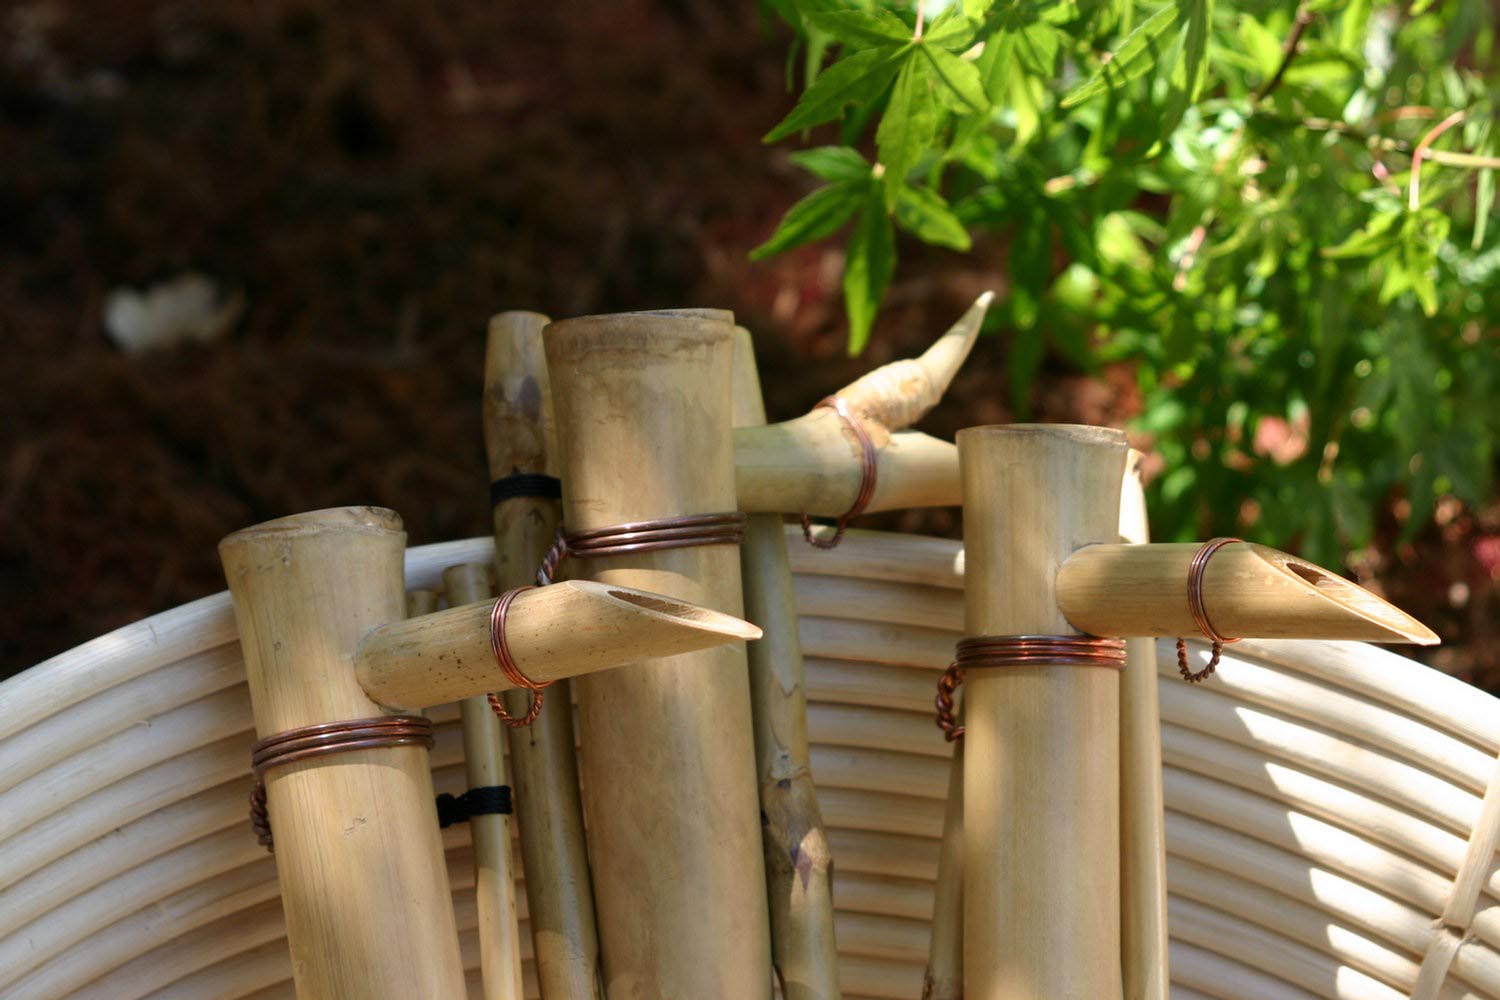 Bamboo Fountain Kit